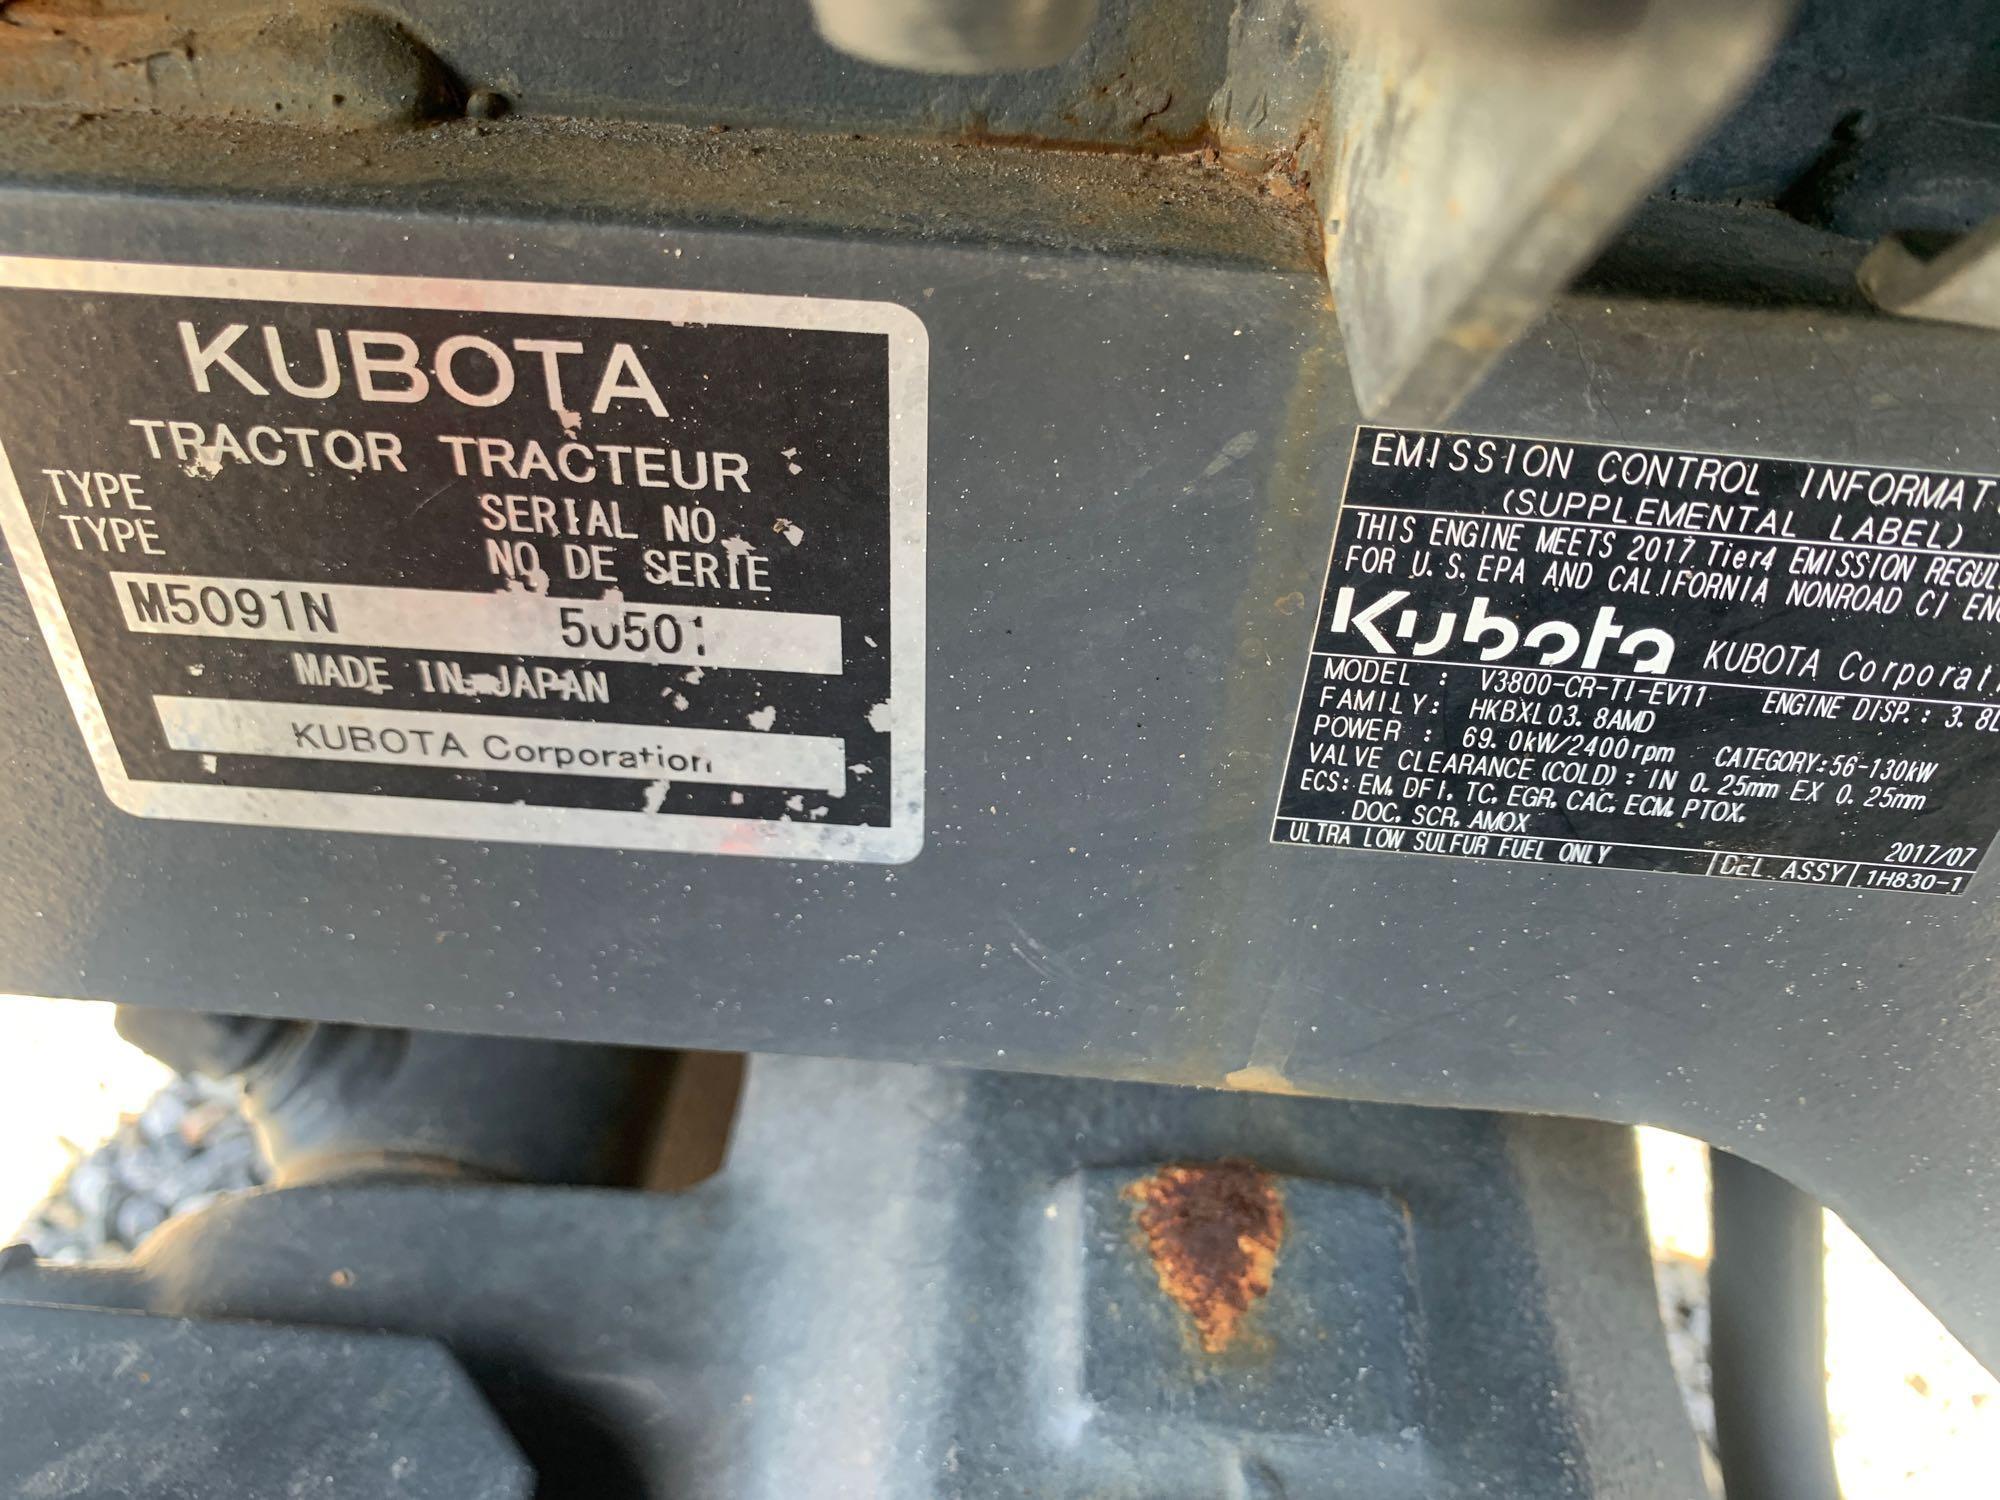 Kubota M5-091N 4WD Tractor